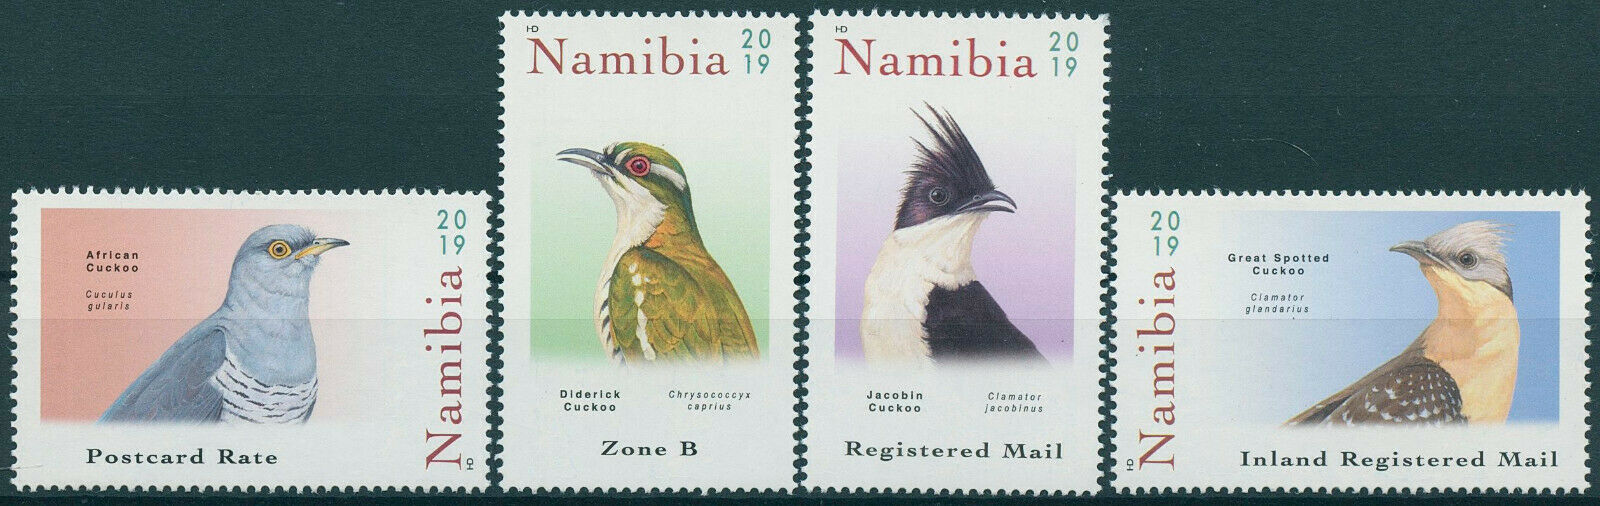 Namibia 2019 MNH Birds on Stamps Cuckoos Diderick Jacobin Cuckoo 4v Set